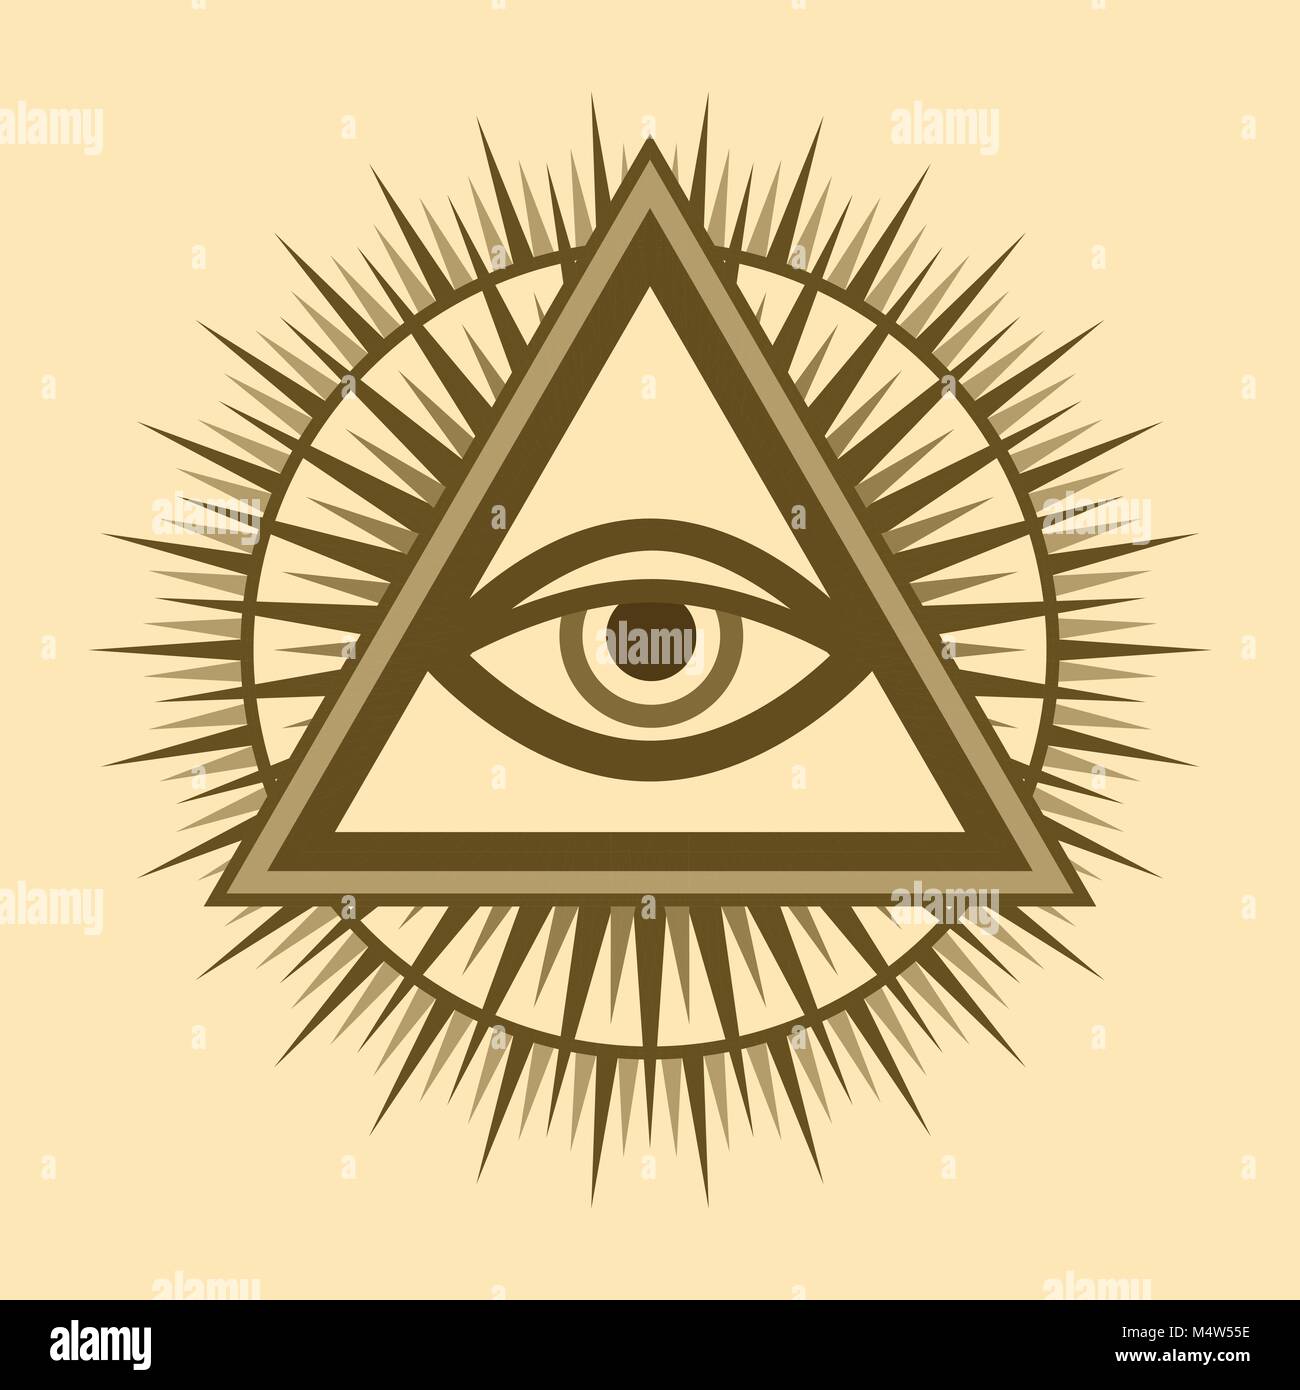 All-Seeing Eye of God (The Eye of Providence | Eye of Omniscience | Luminous Delta | Oculus Dei). Mystical sacral symbol of Illuminati and Freemasonry. Stock Vector